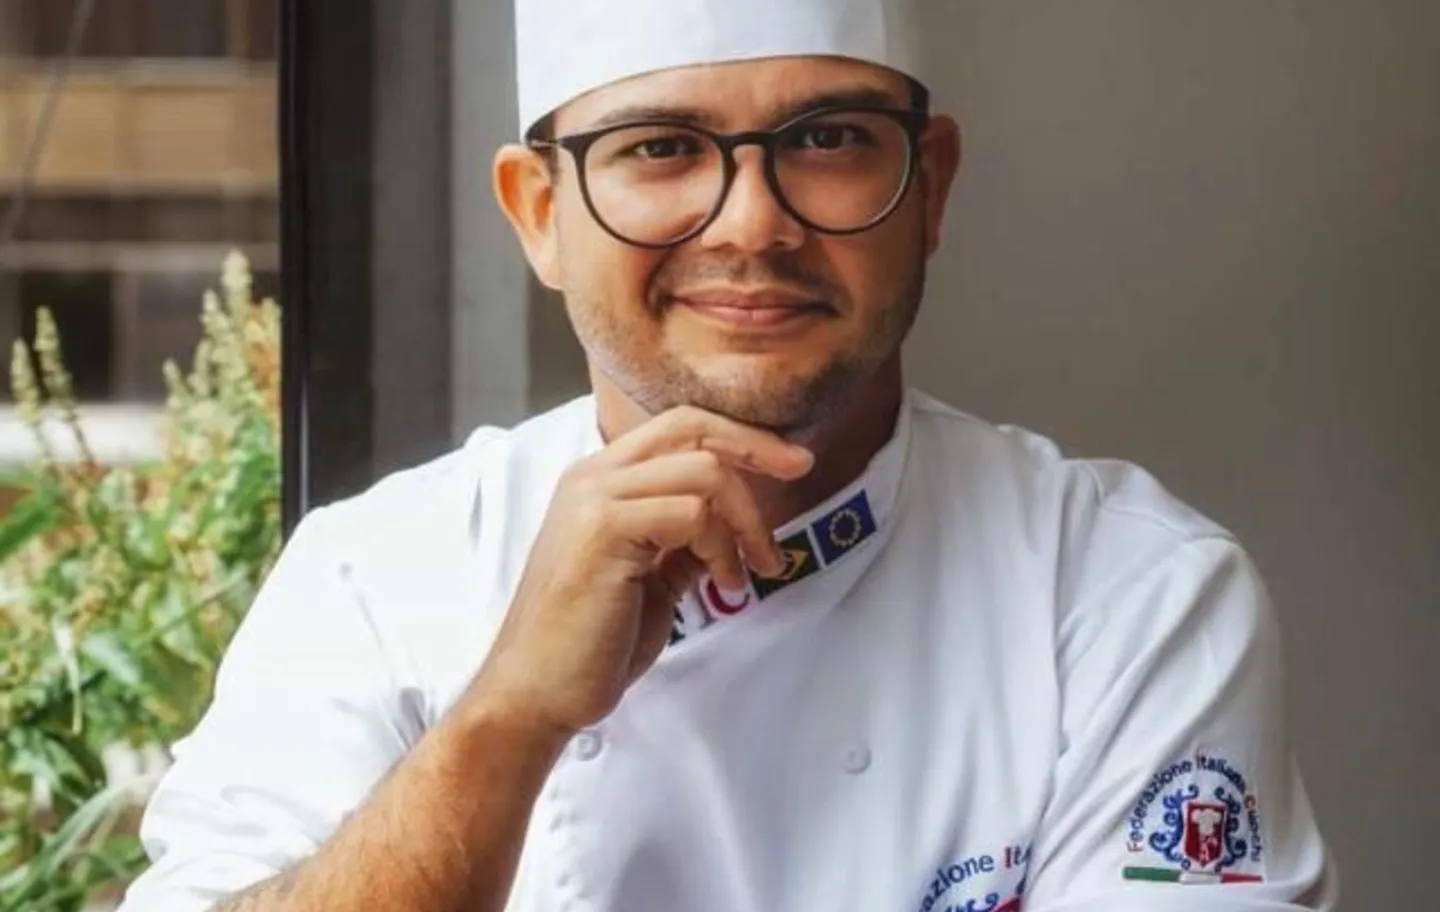 Chef Bruno Tupinambá